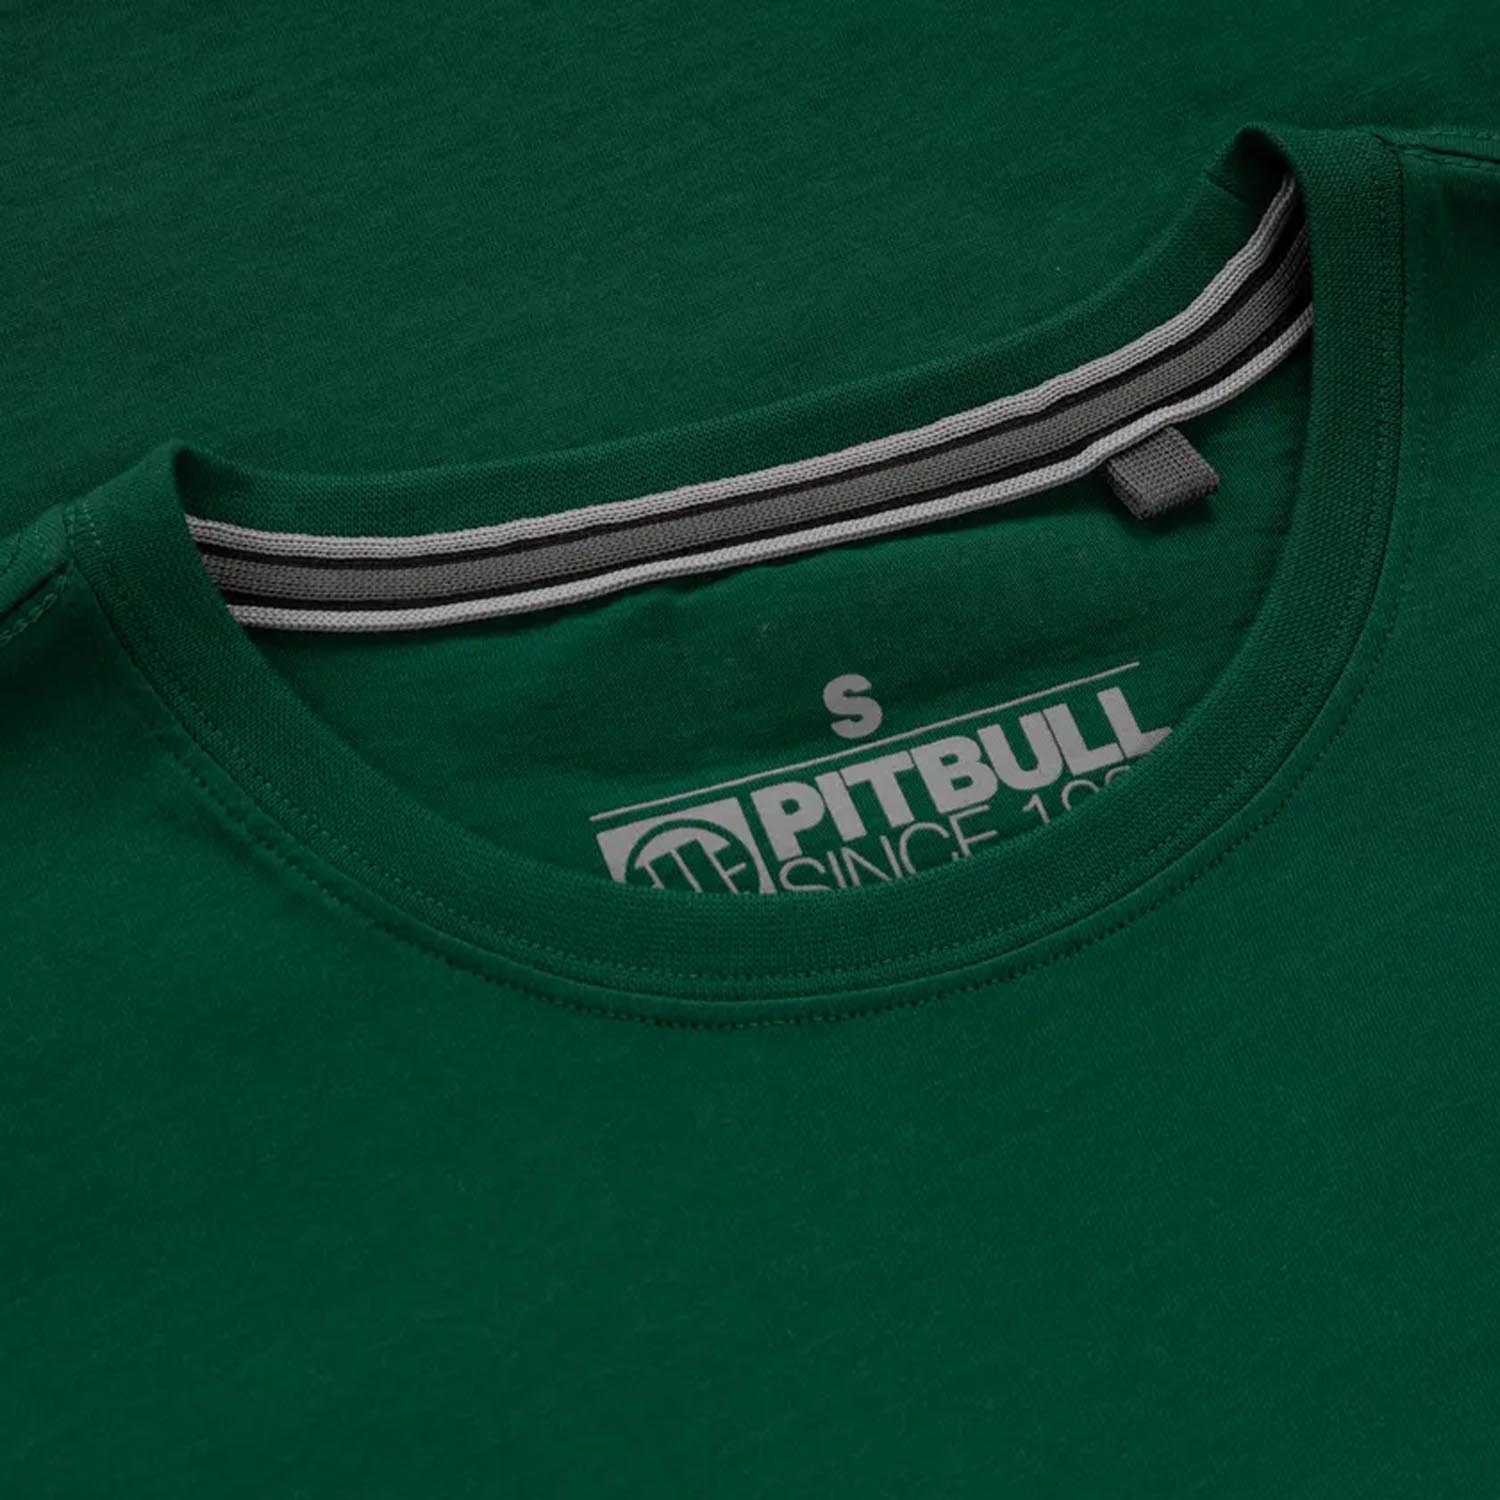 Pit Bull West Coast T-Shirt, Hilltop S70, blattgrün, S | S | 1341784-1